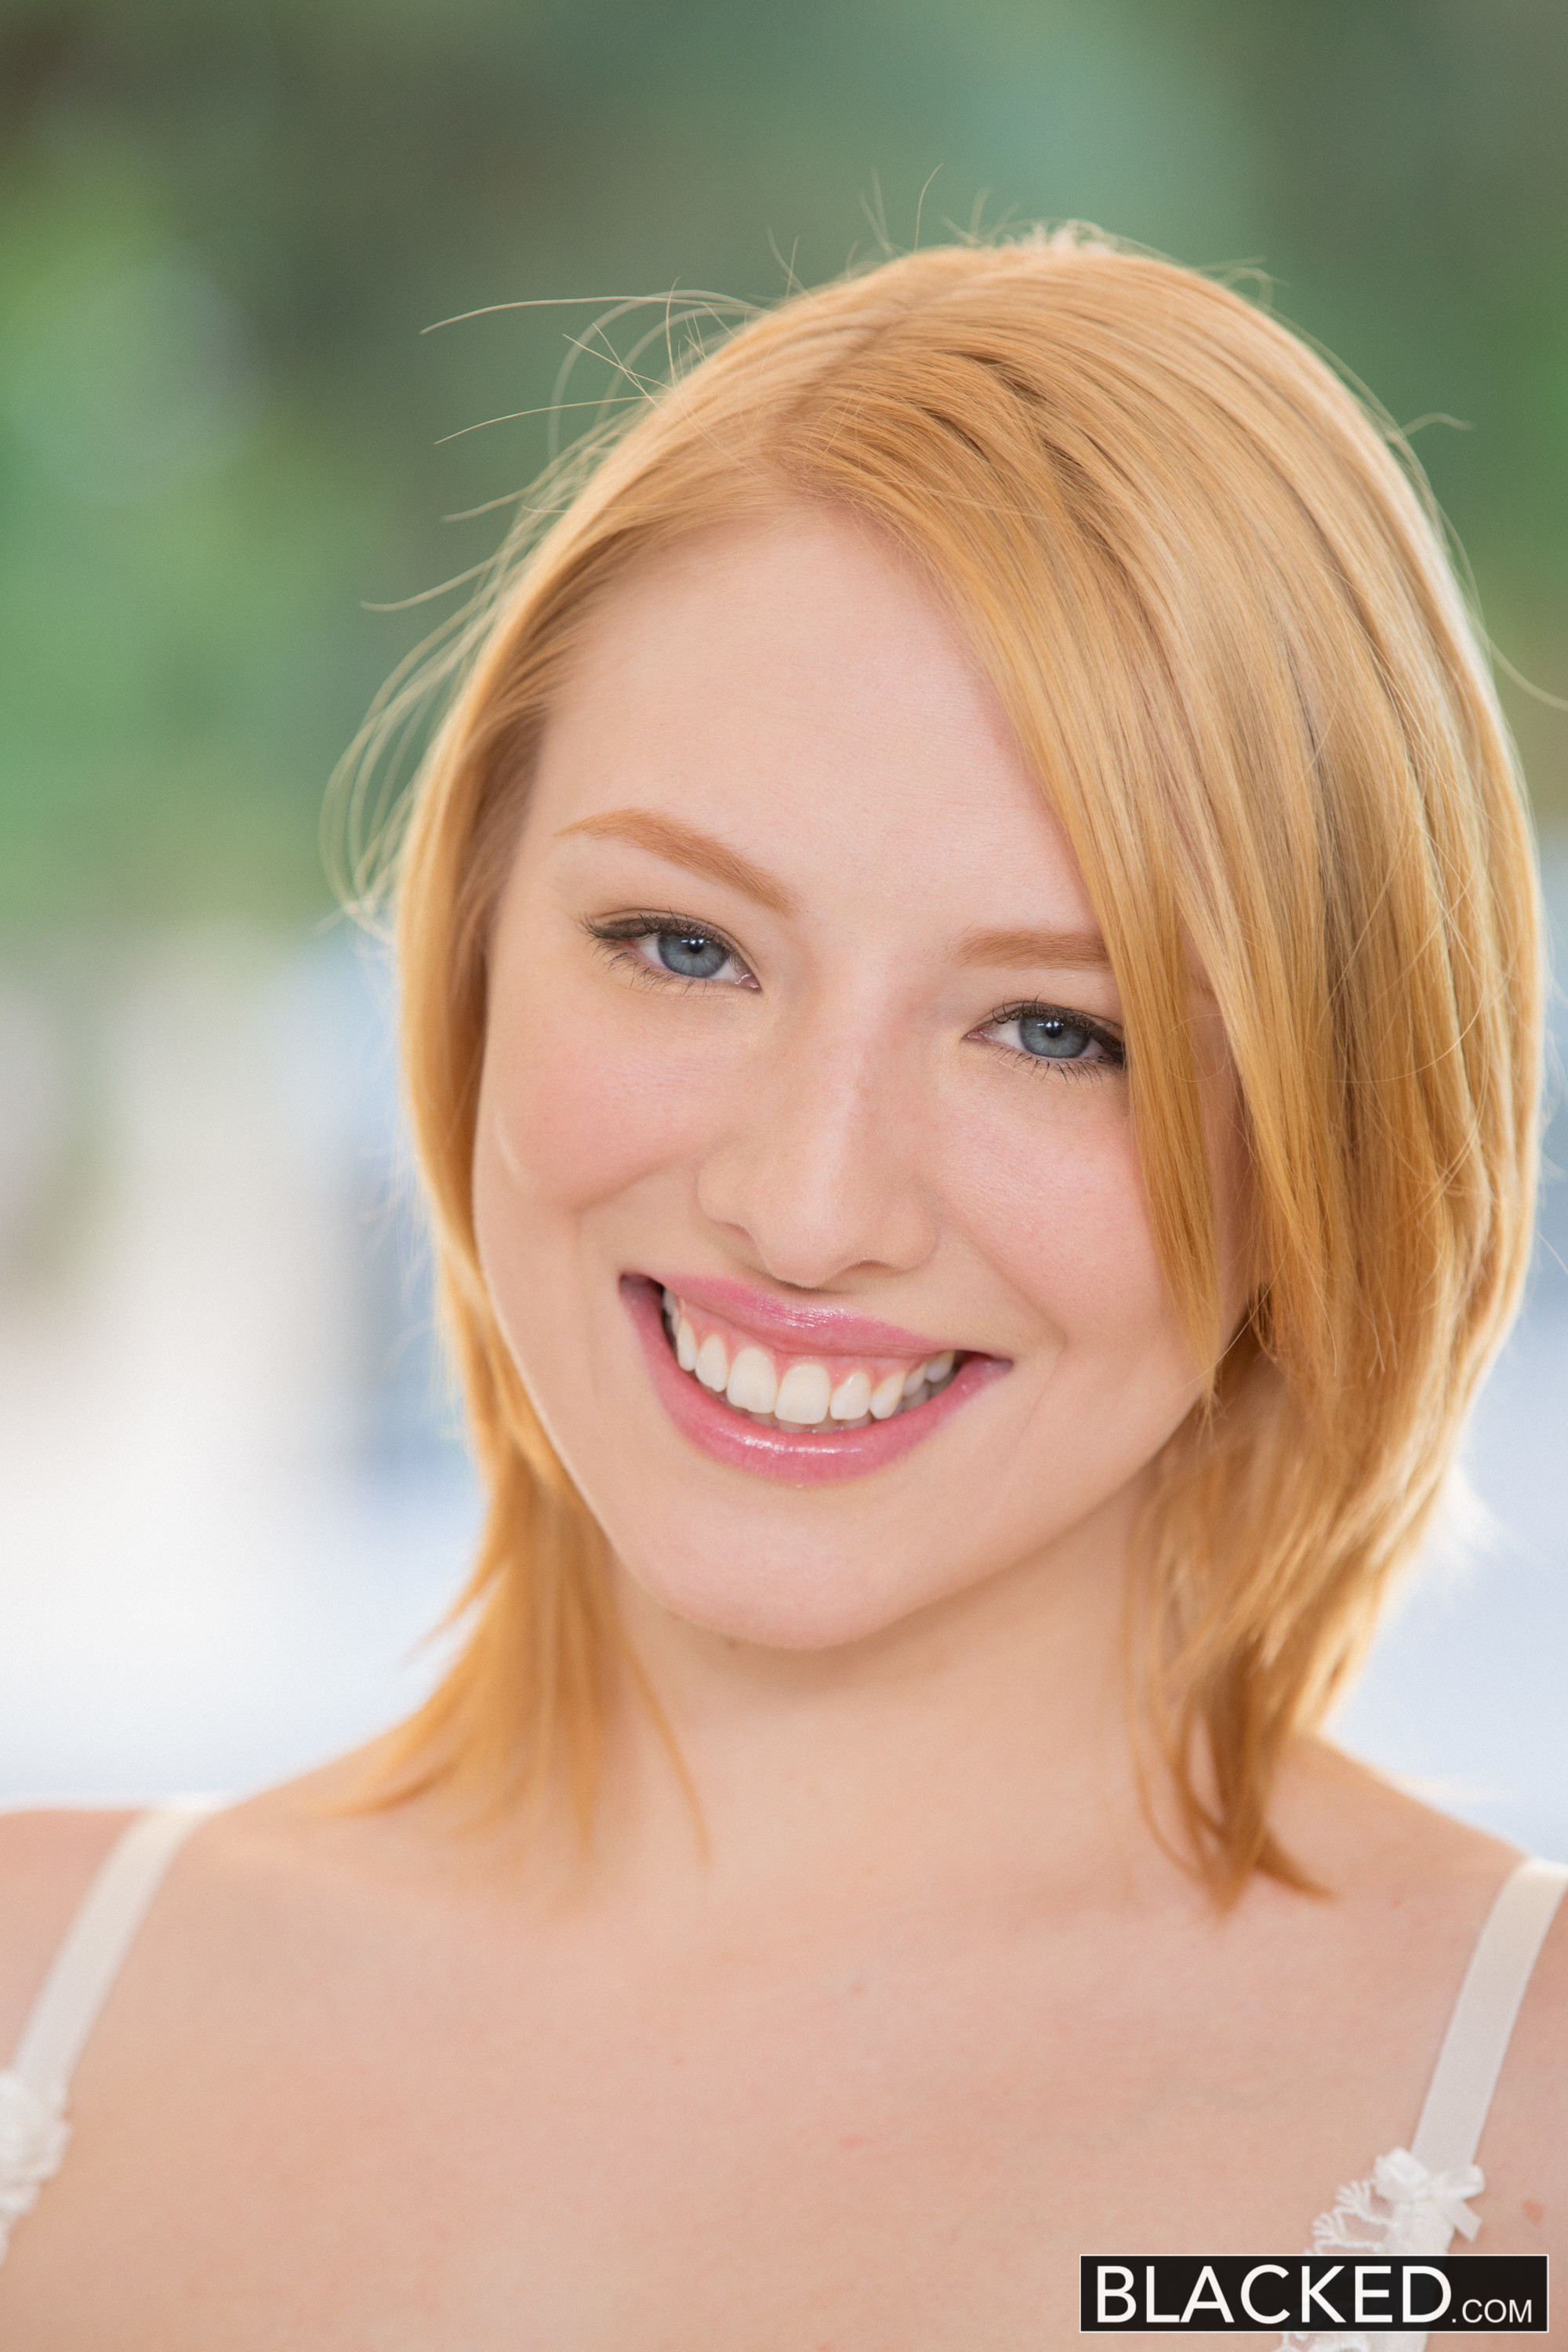 People 2000x3000 Trillium redhead smiling model pornstar Blacked women face portrait blue eyes American women